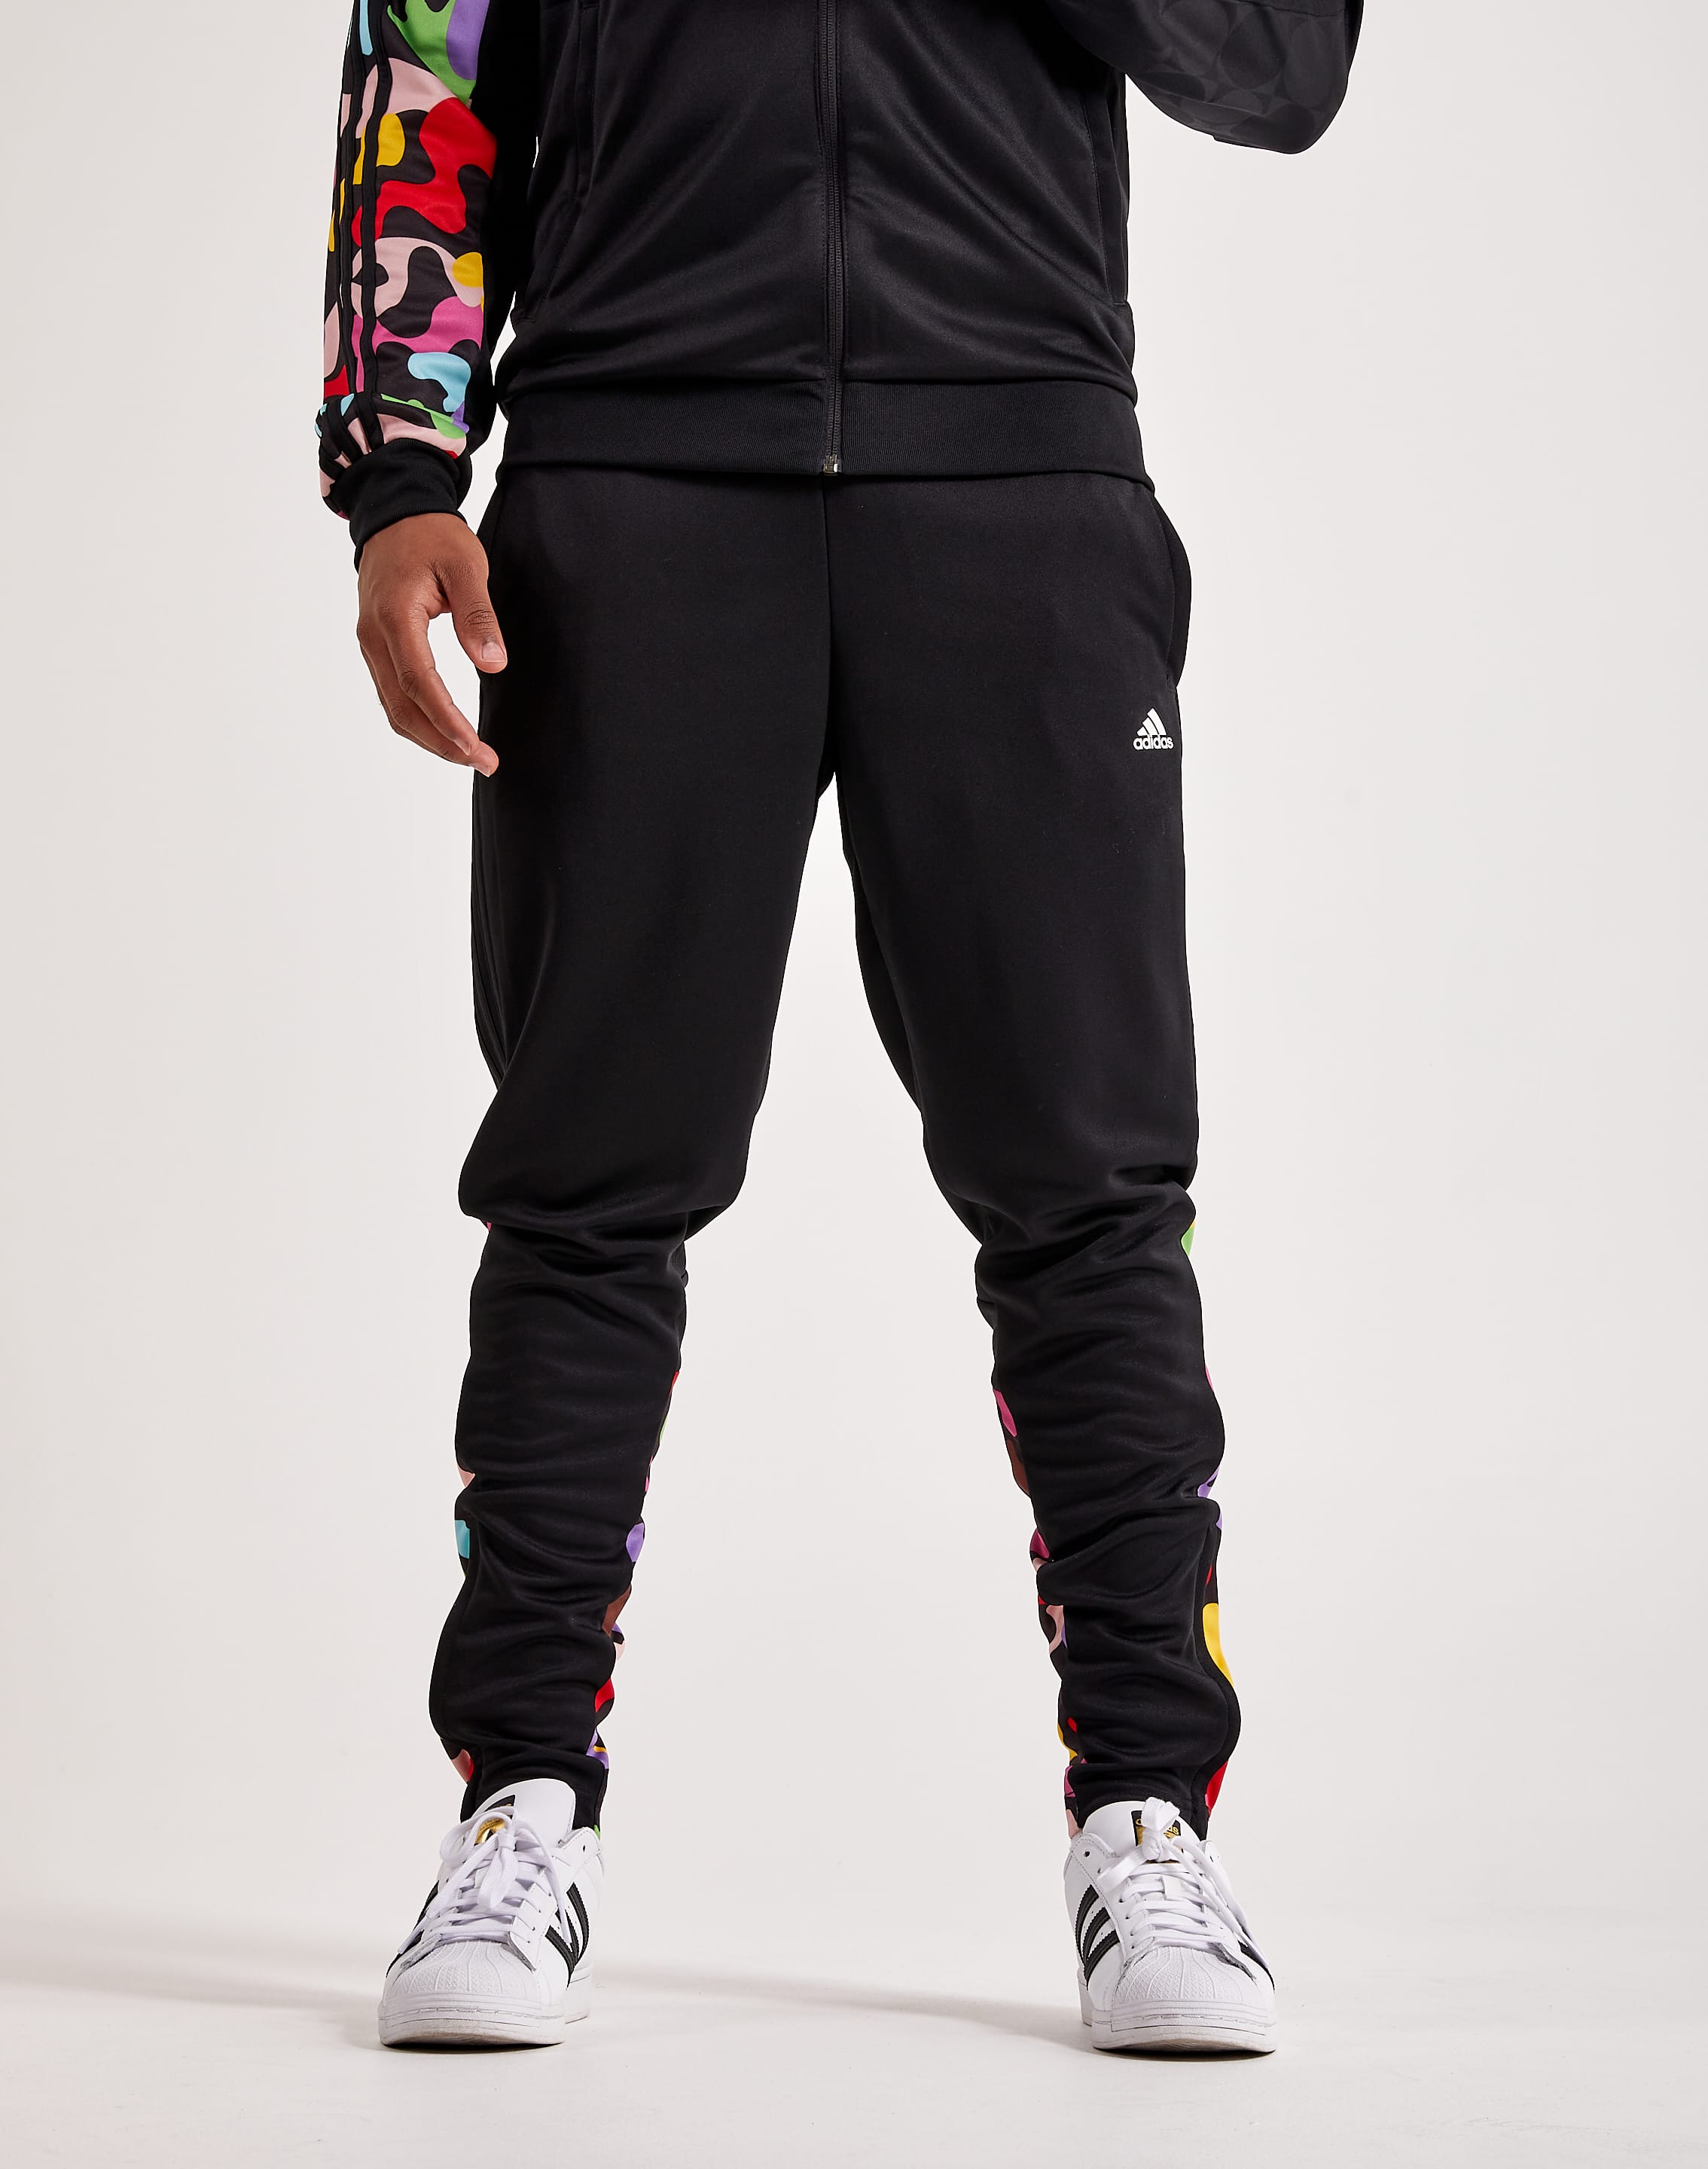 Adidas DTLR Tiro Pants Rich – Mnisi Track